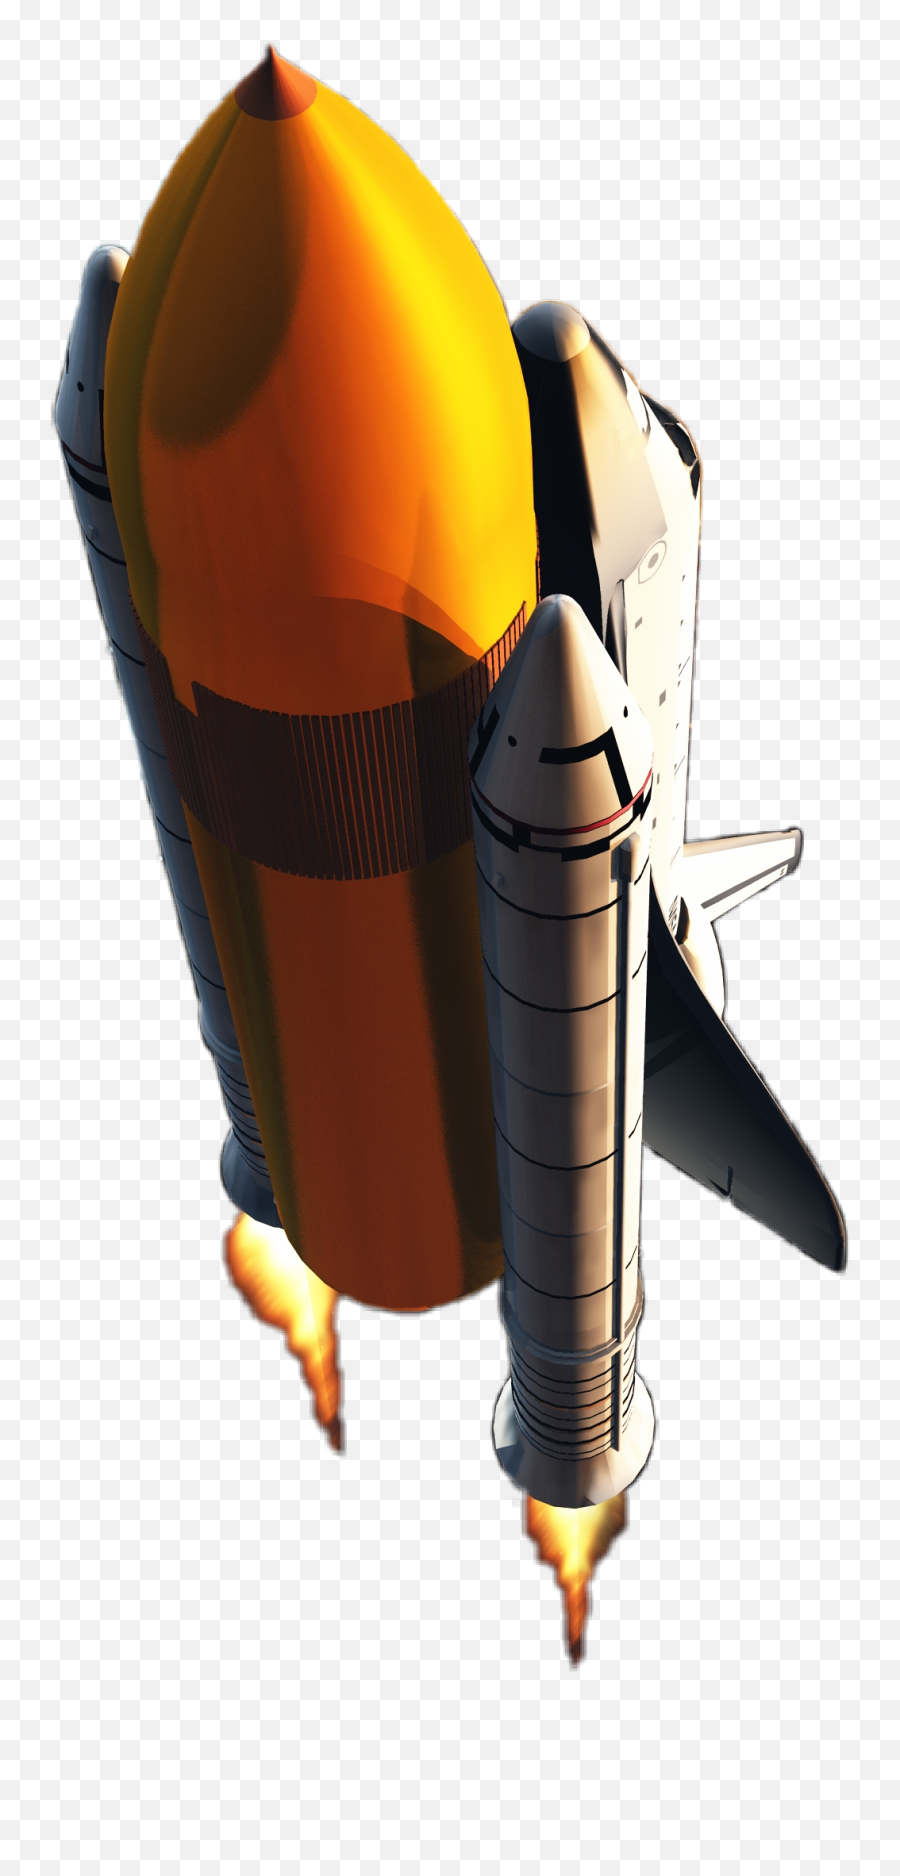 Jasroinsanityspaceshuttle - Missile Emoji,Space Shuttle Emoji